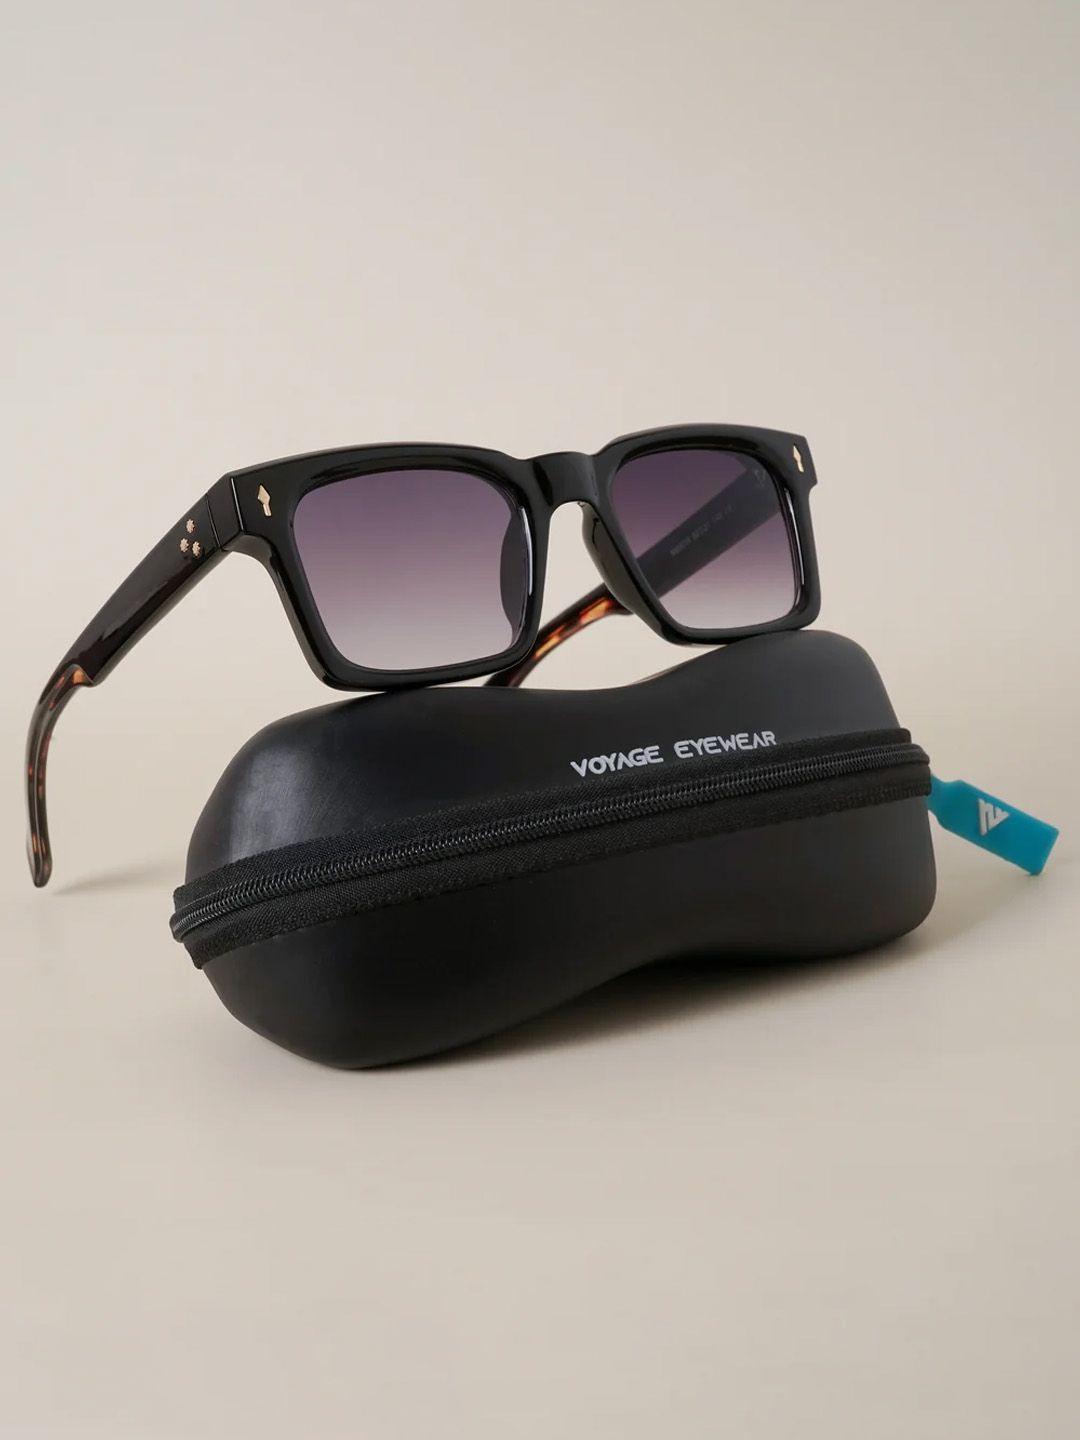 voyage unisex purple lens & black wayfarer sunglasses with uv protected lens